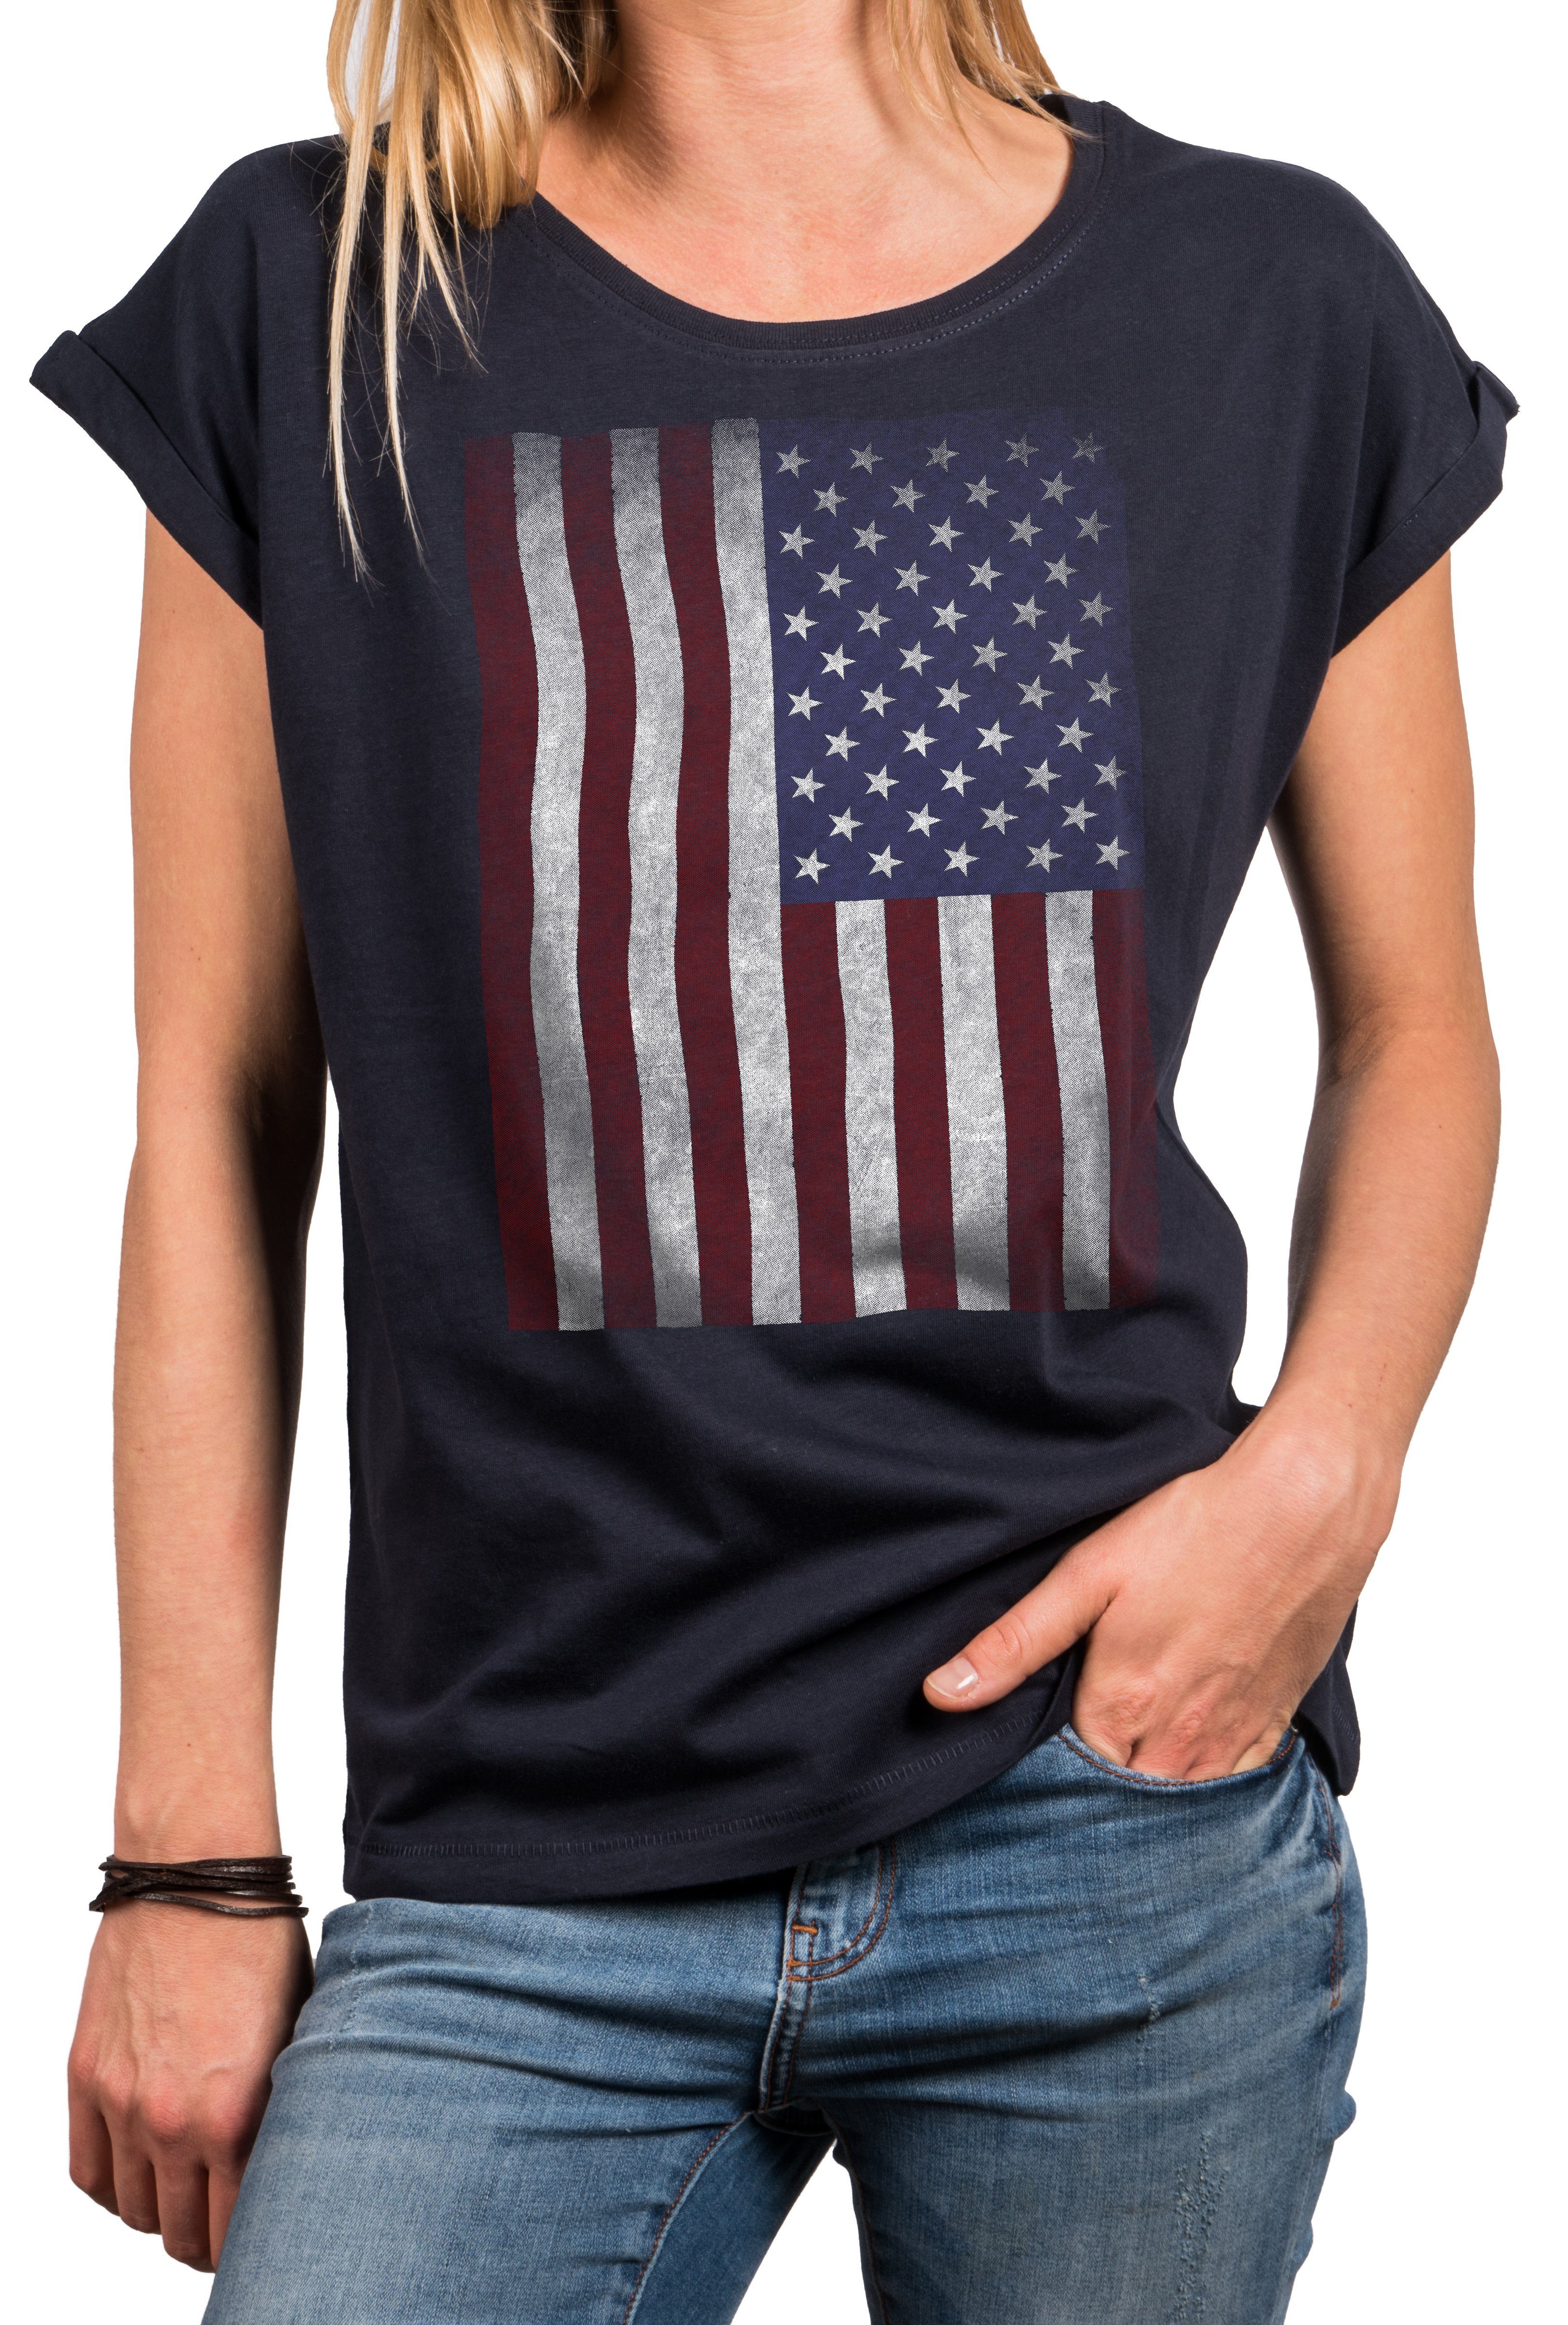 große Oberteile Damen Größen Amerika Fahne schwarz, Sommer Top grau, (Kurzarm, MAKAYA USA Flagge Tunika blau) Baumwolle, Print-Shirt Vintage